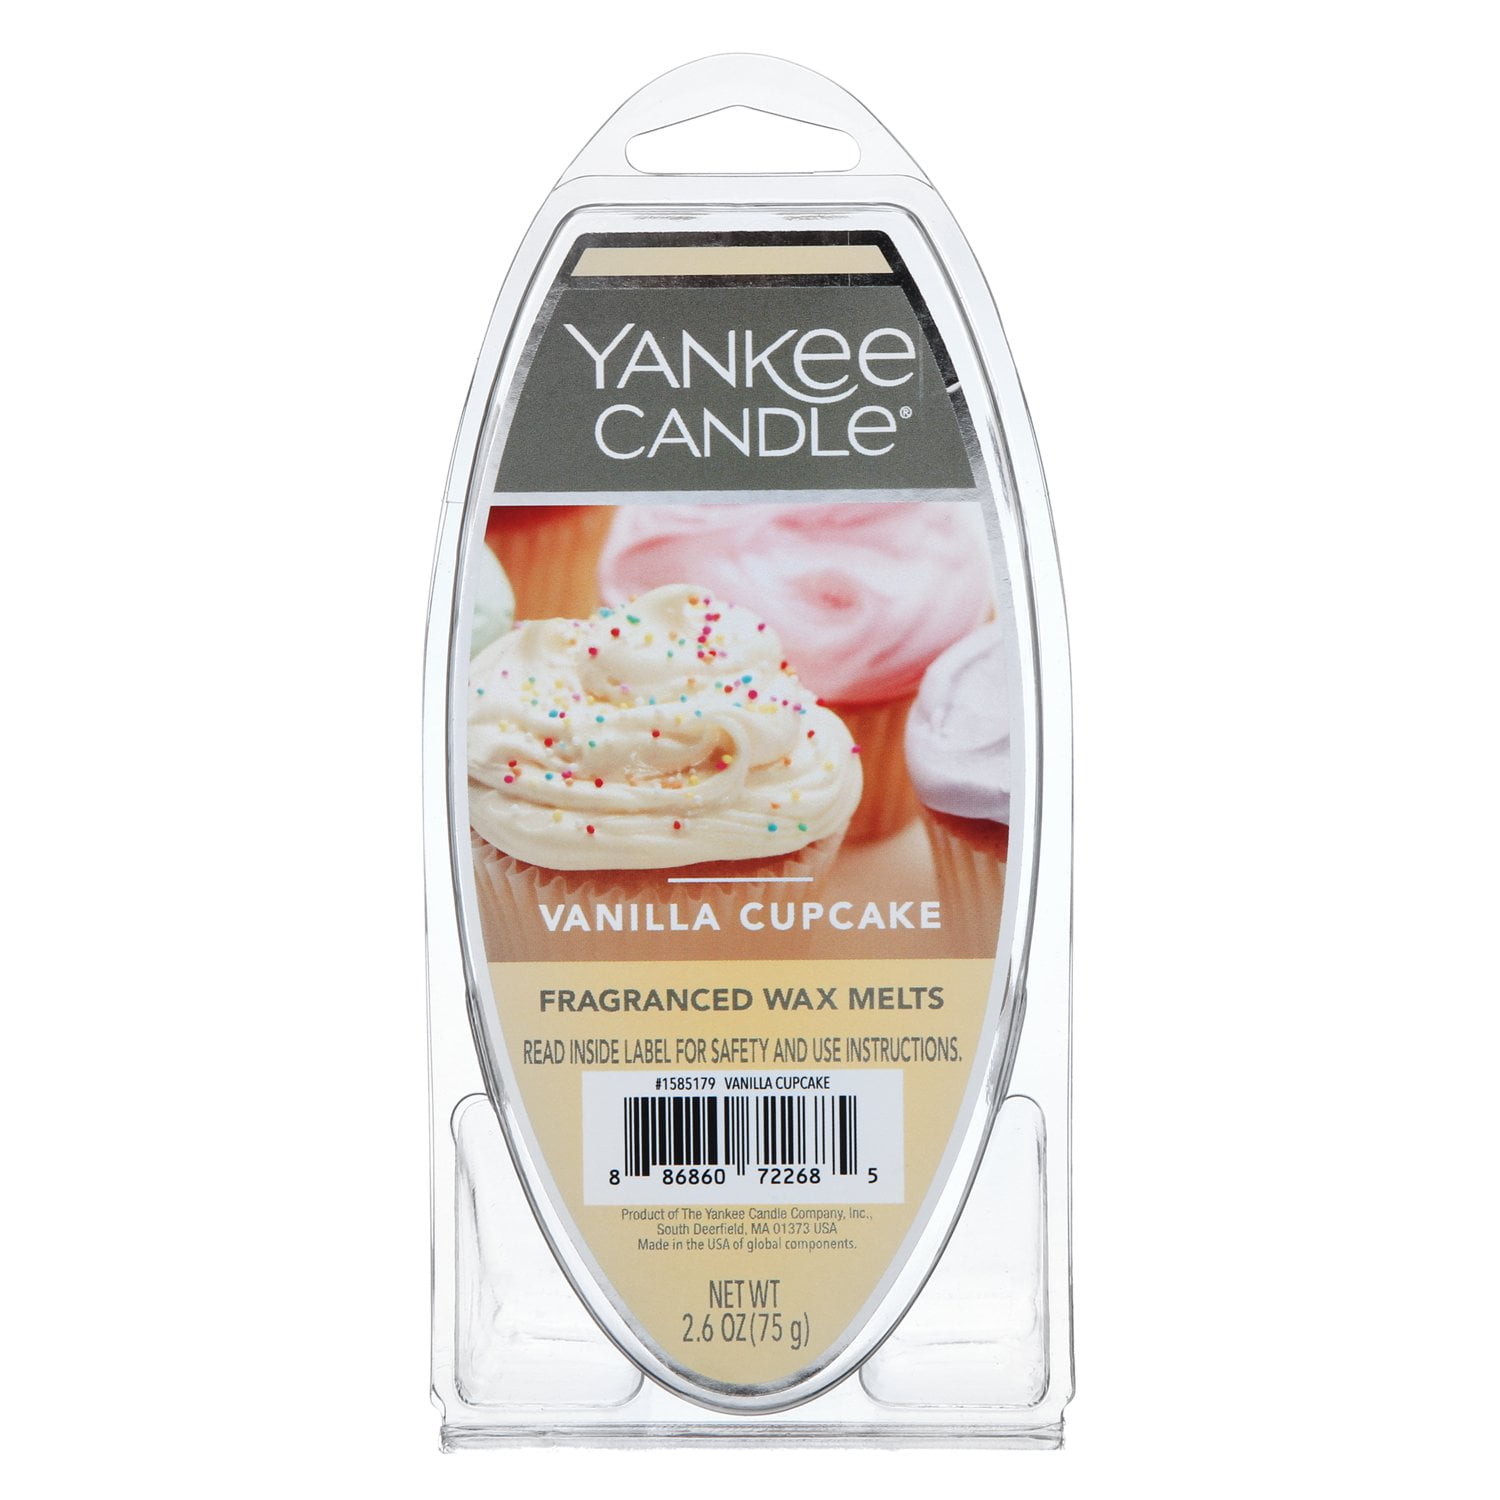 Yankee Candle Fall 2019 Walmart Wax Melts Reviews